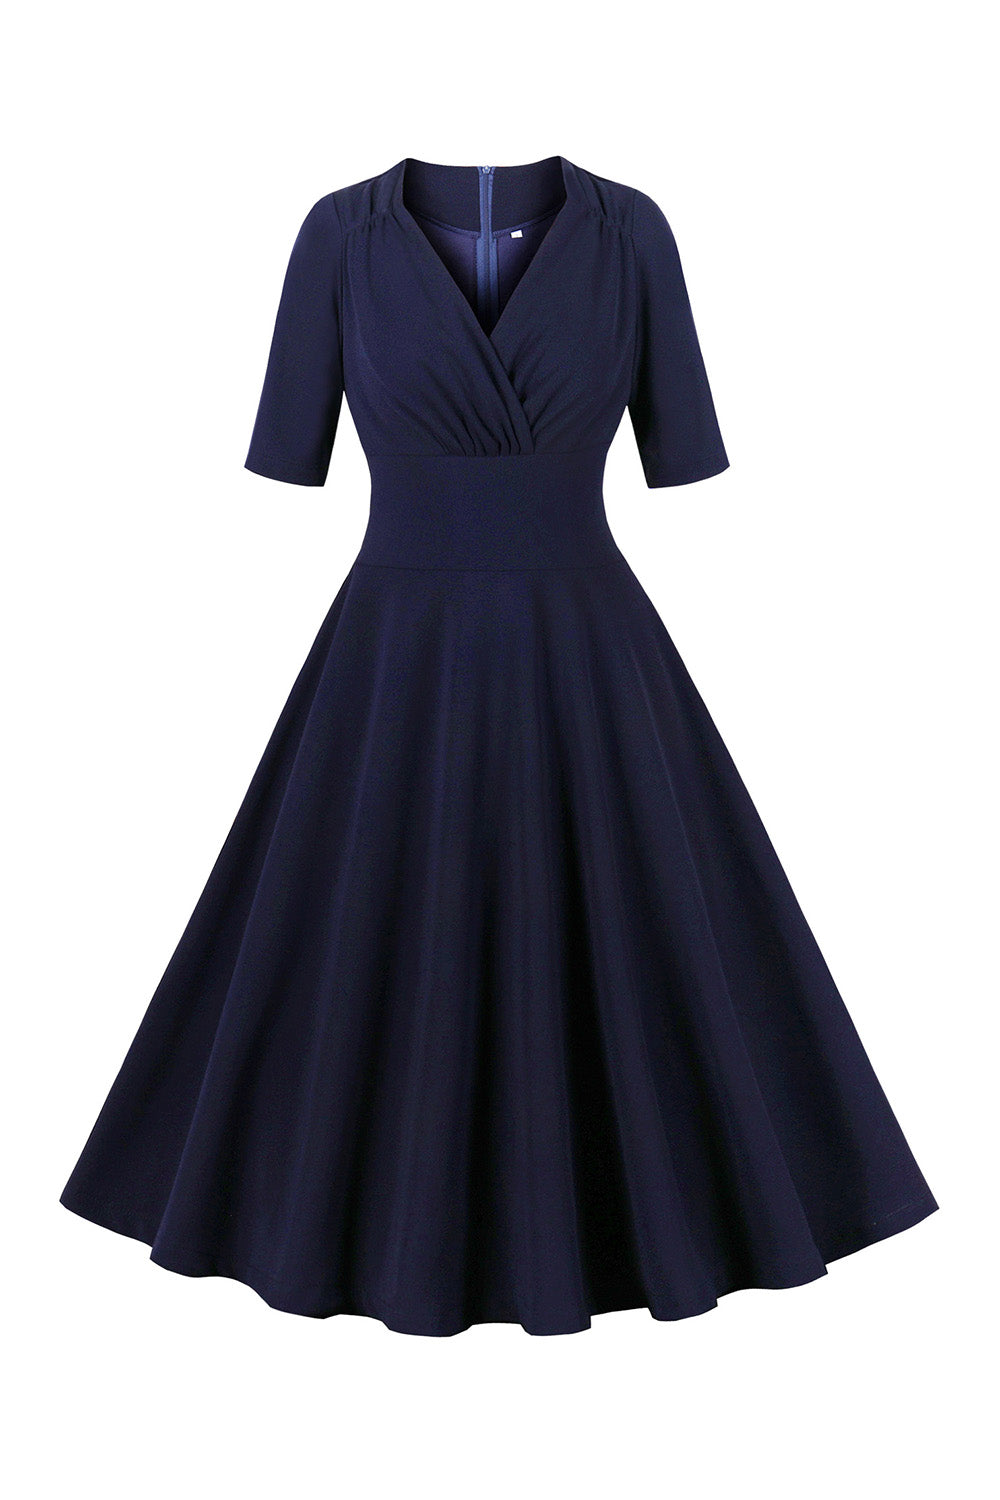 Media manga azul marino V cuello 1950s vestido